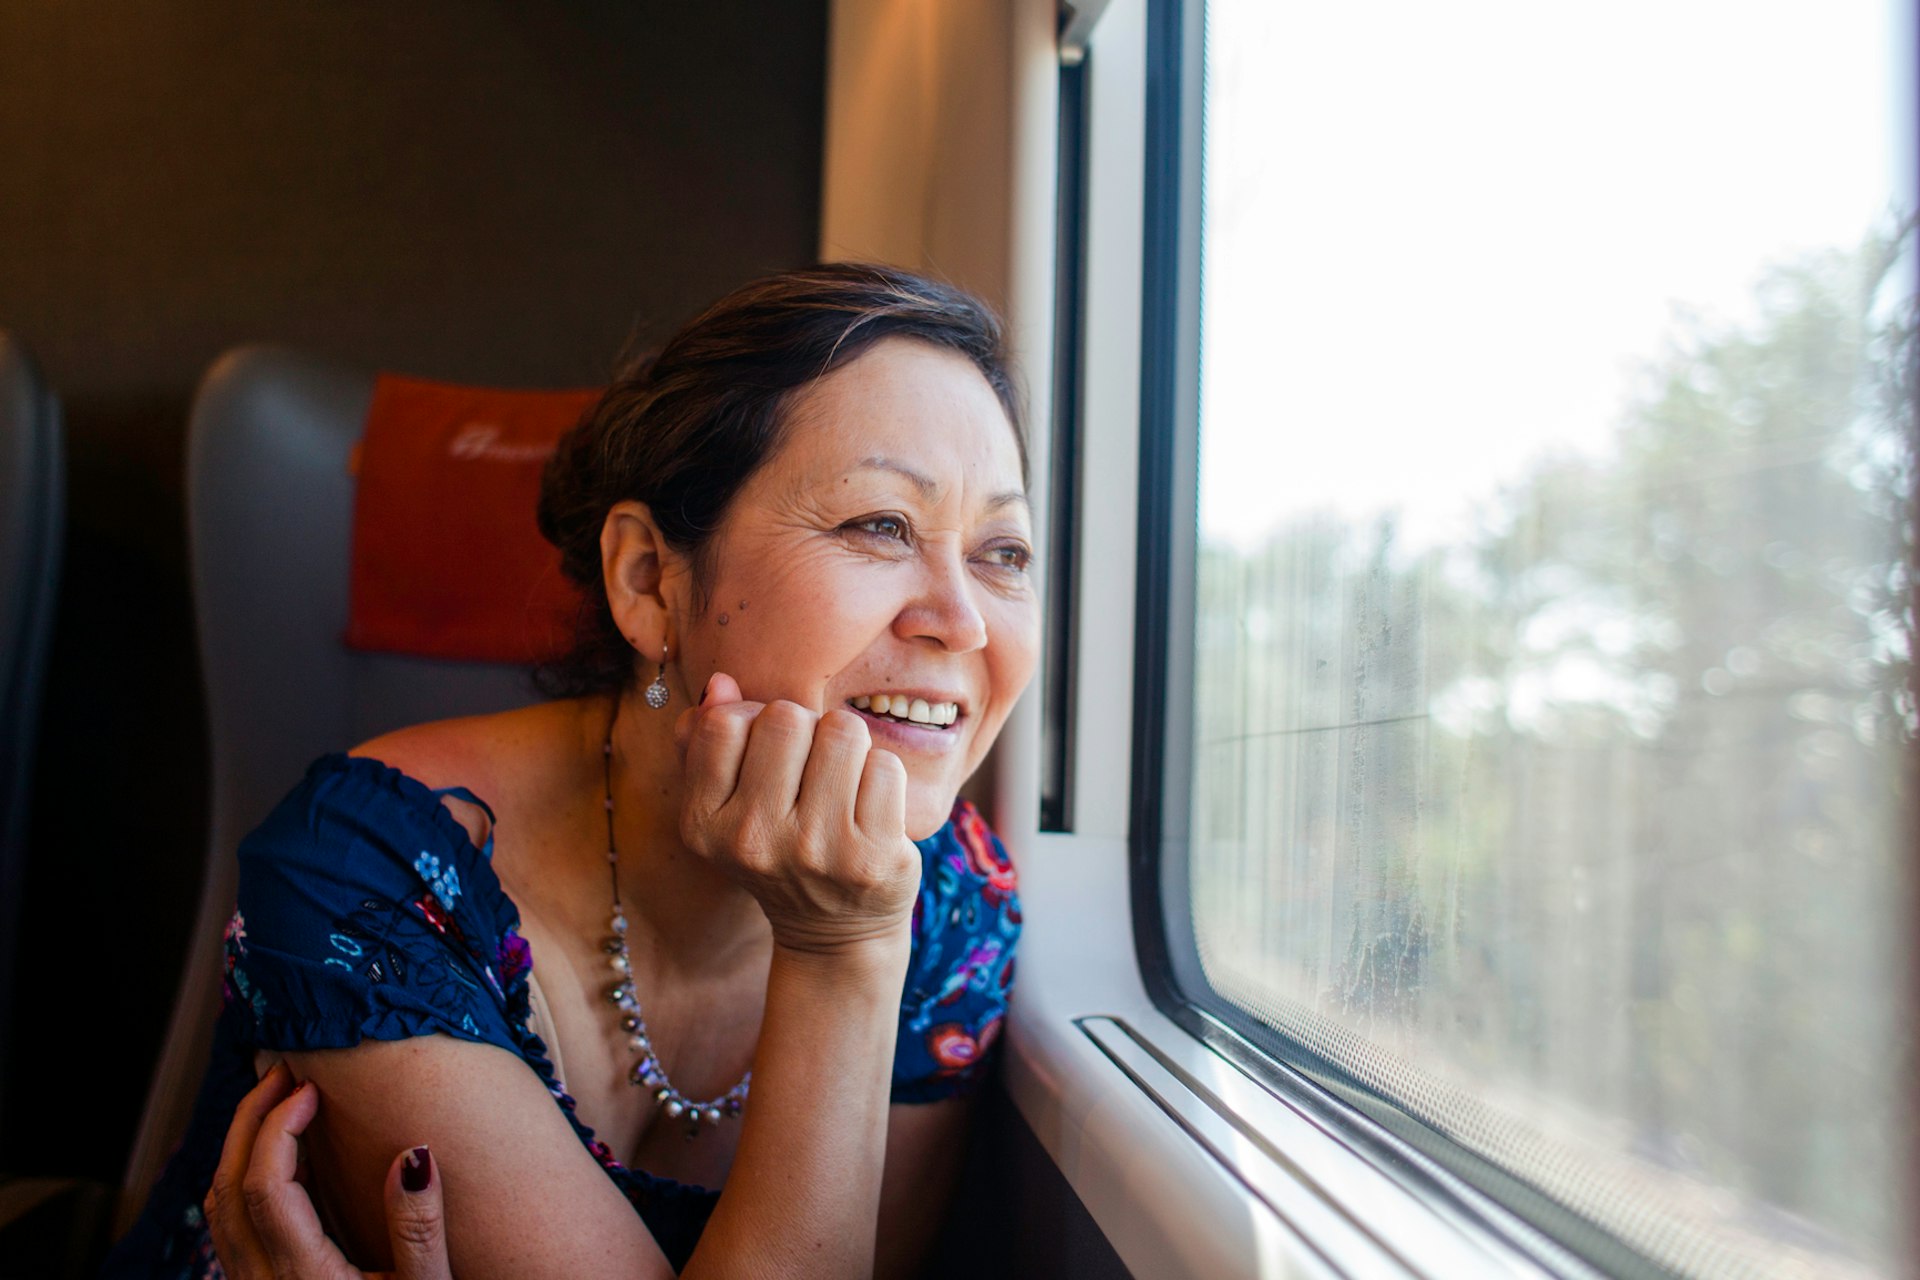 A tourist enjoys a train trip through Italy